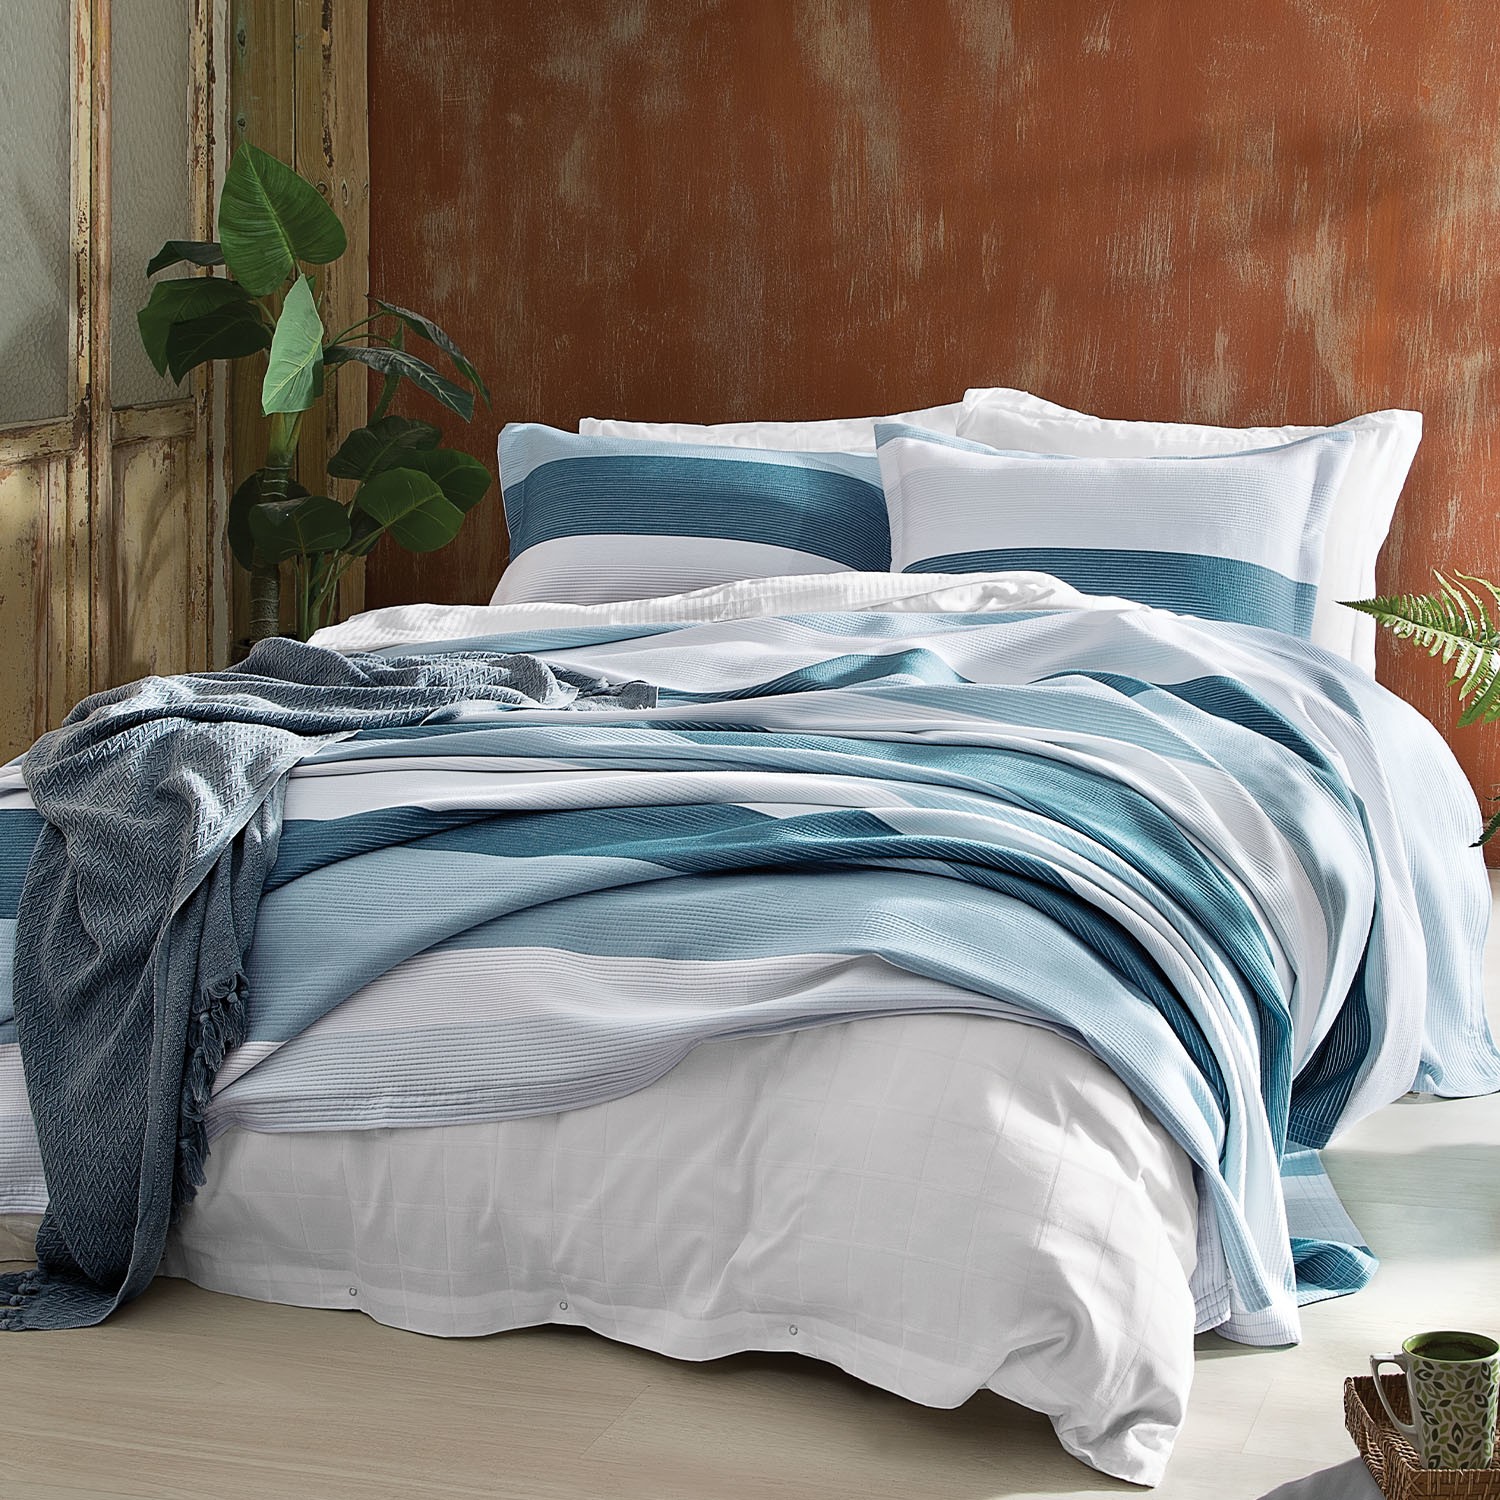 Yataş Bedding Martin Yatak Örtüsü Seti Çift Kişilik Xl Fiyatı